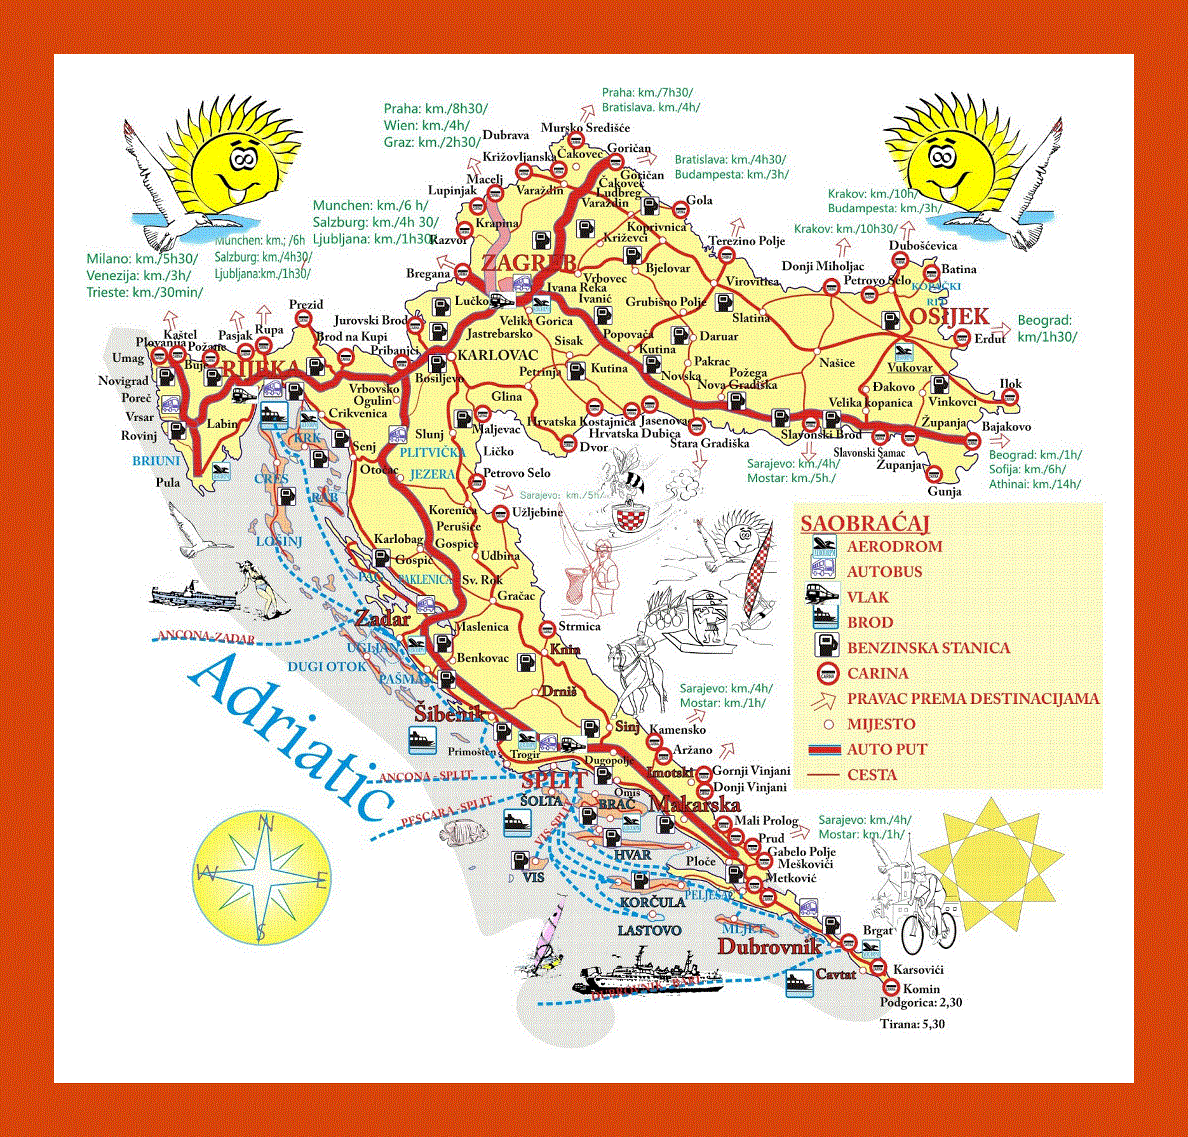 Travel map of Croatia